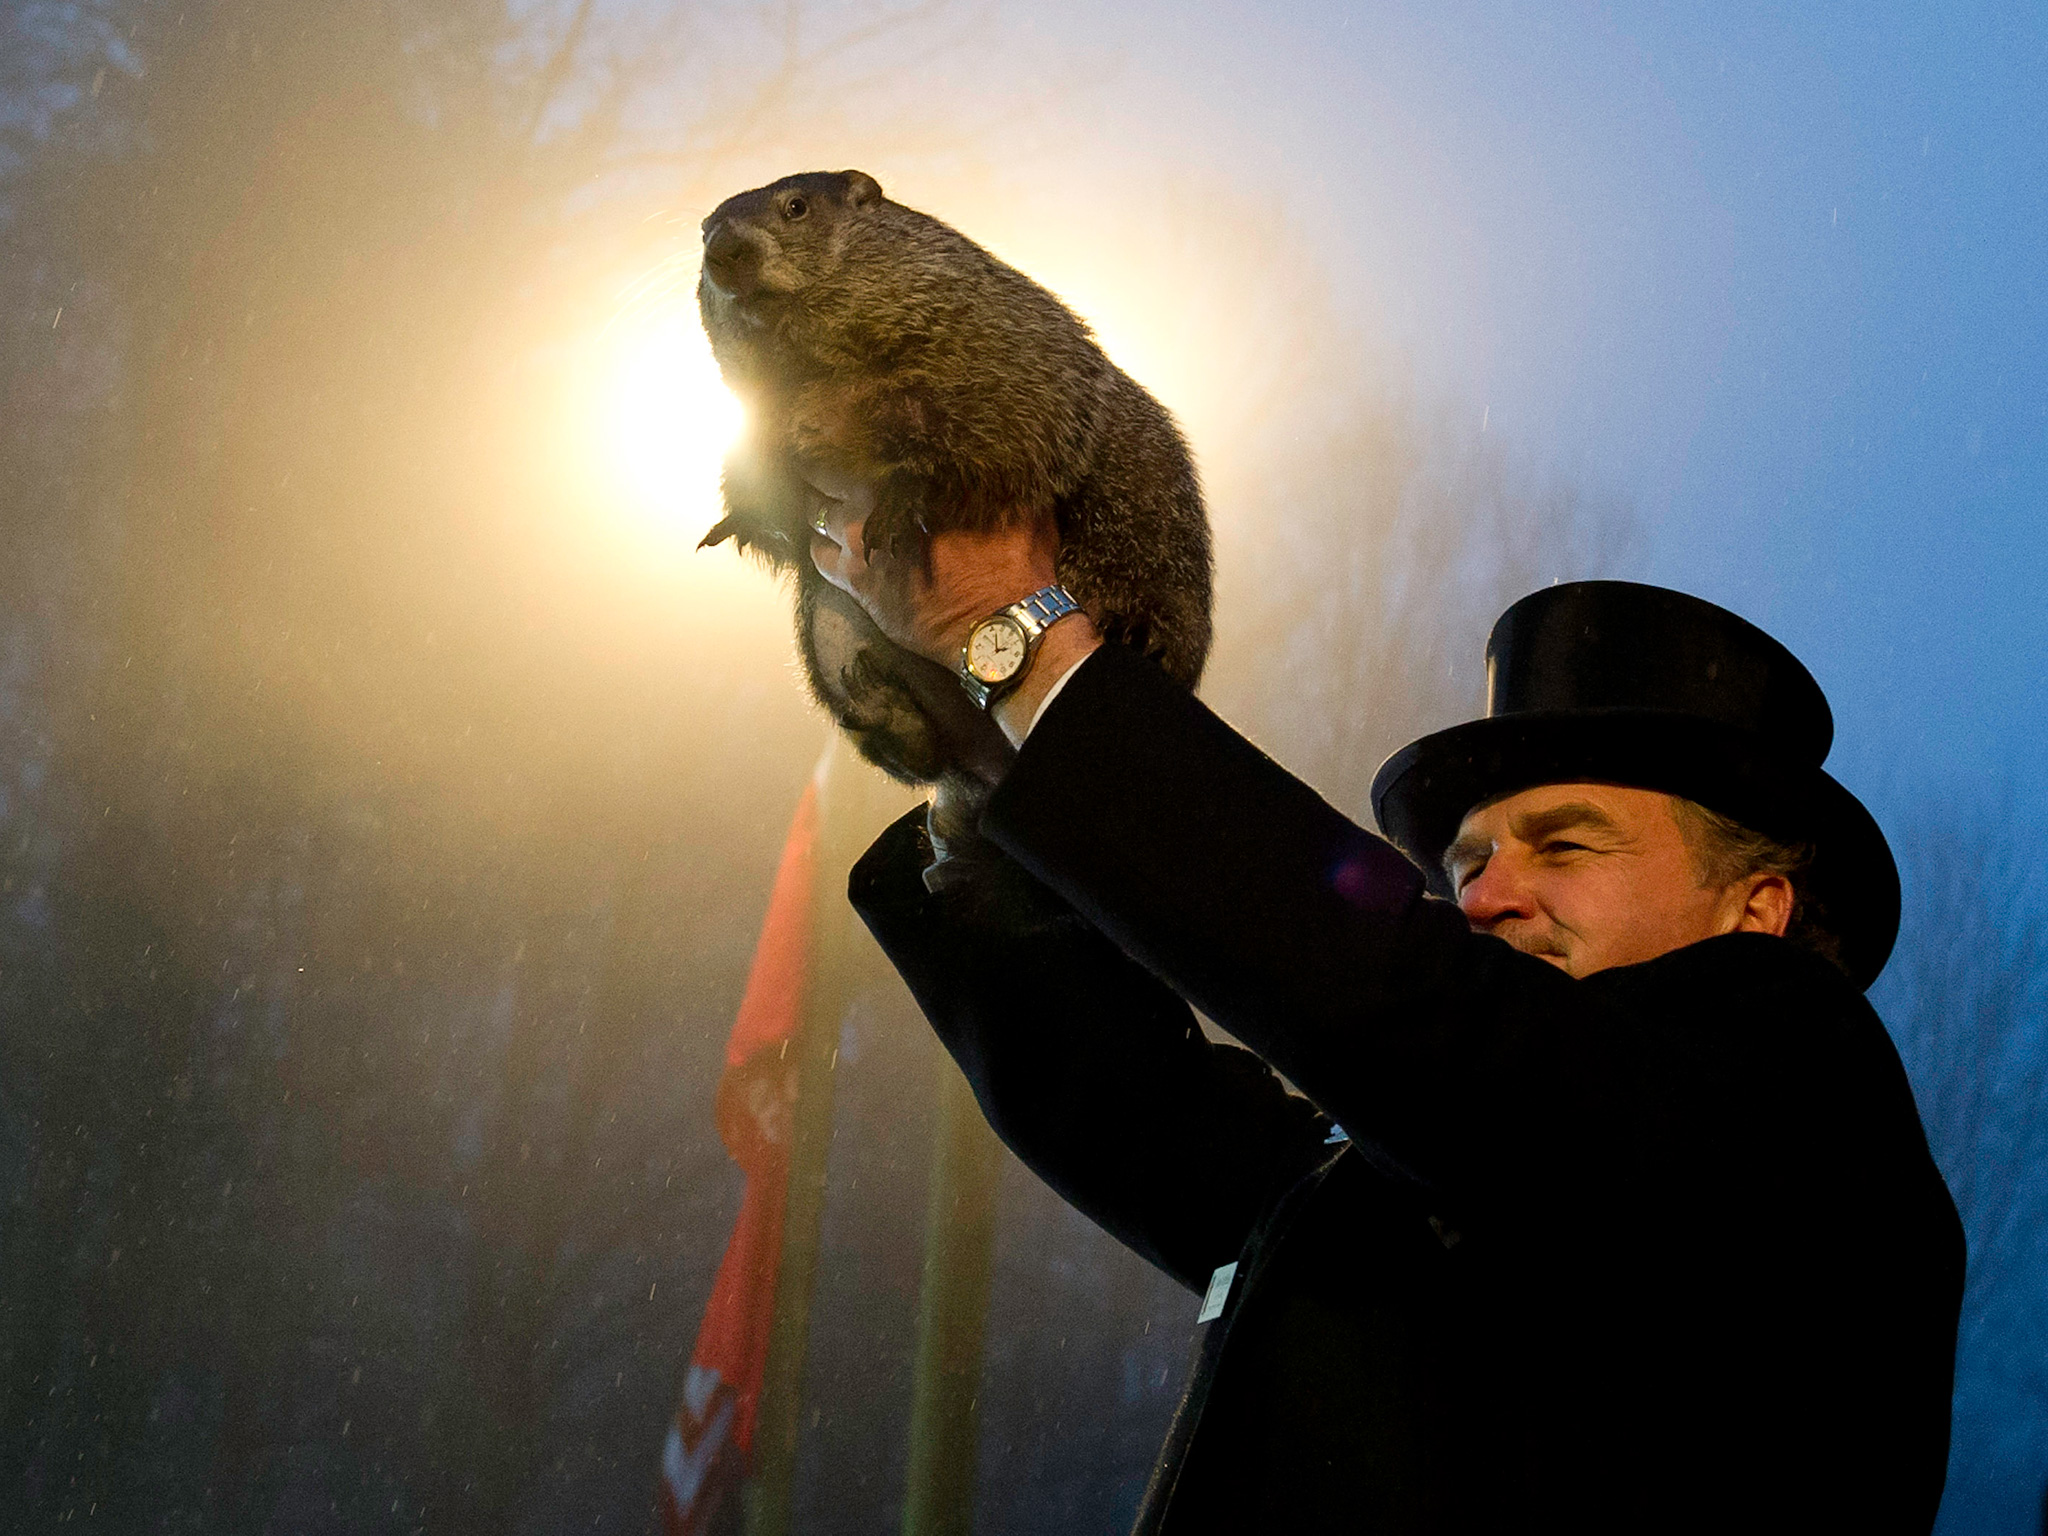 Groundhog handler John Griffiths holds Punxsutawney Phil aloft